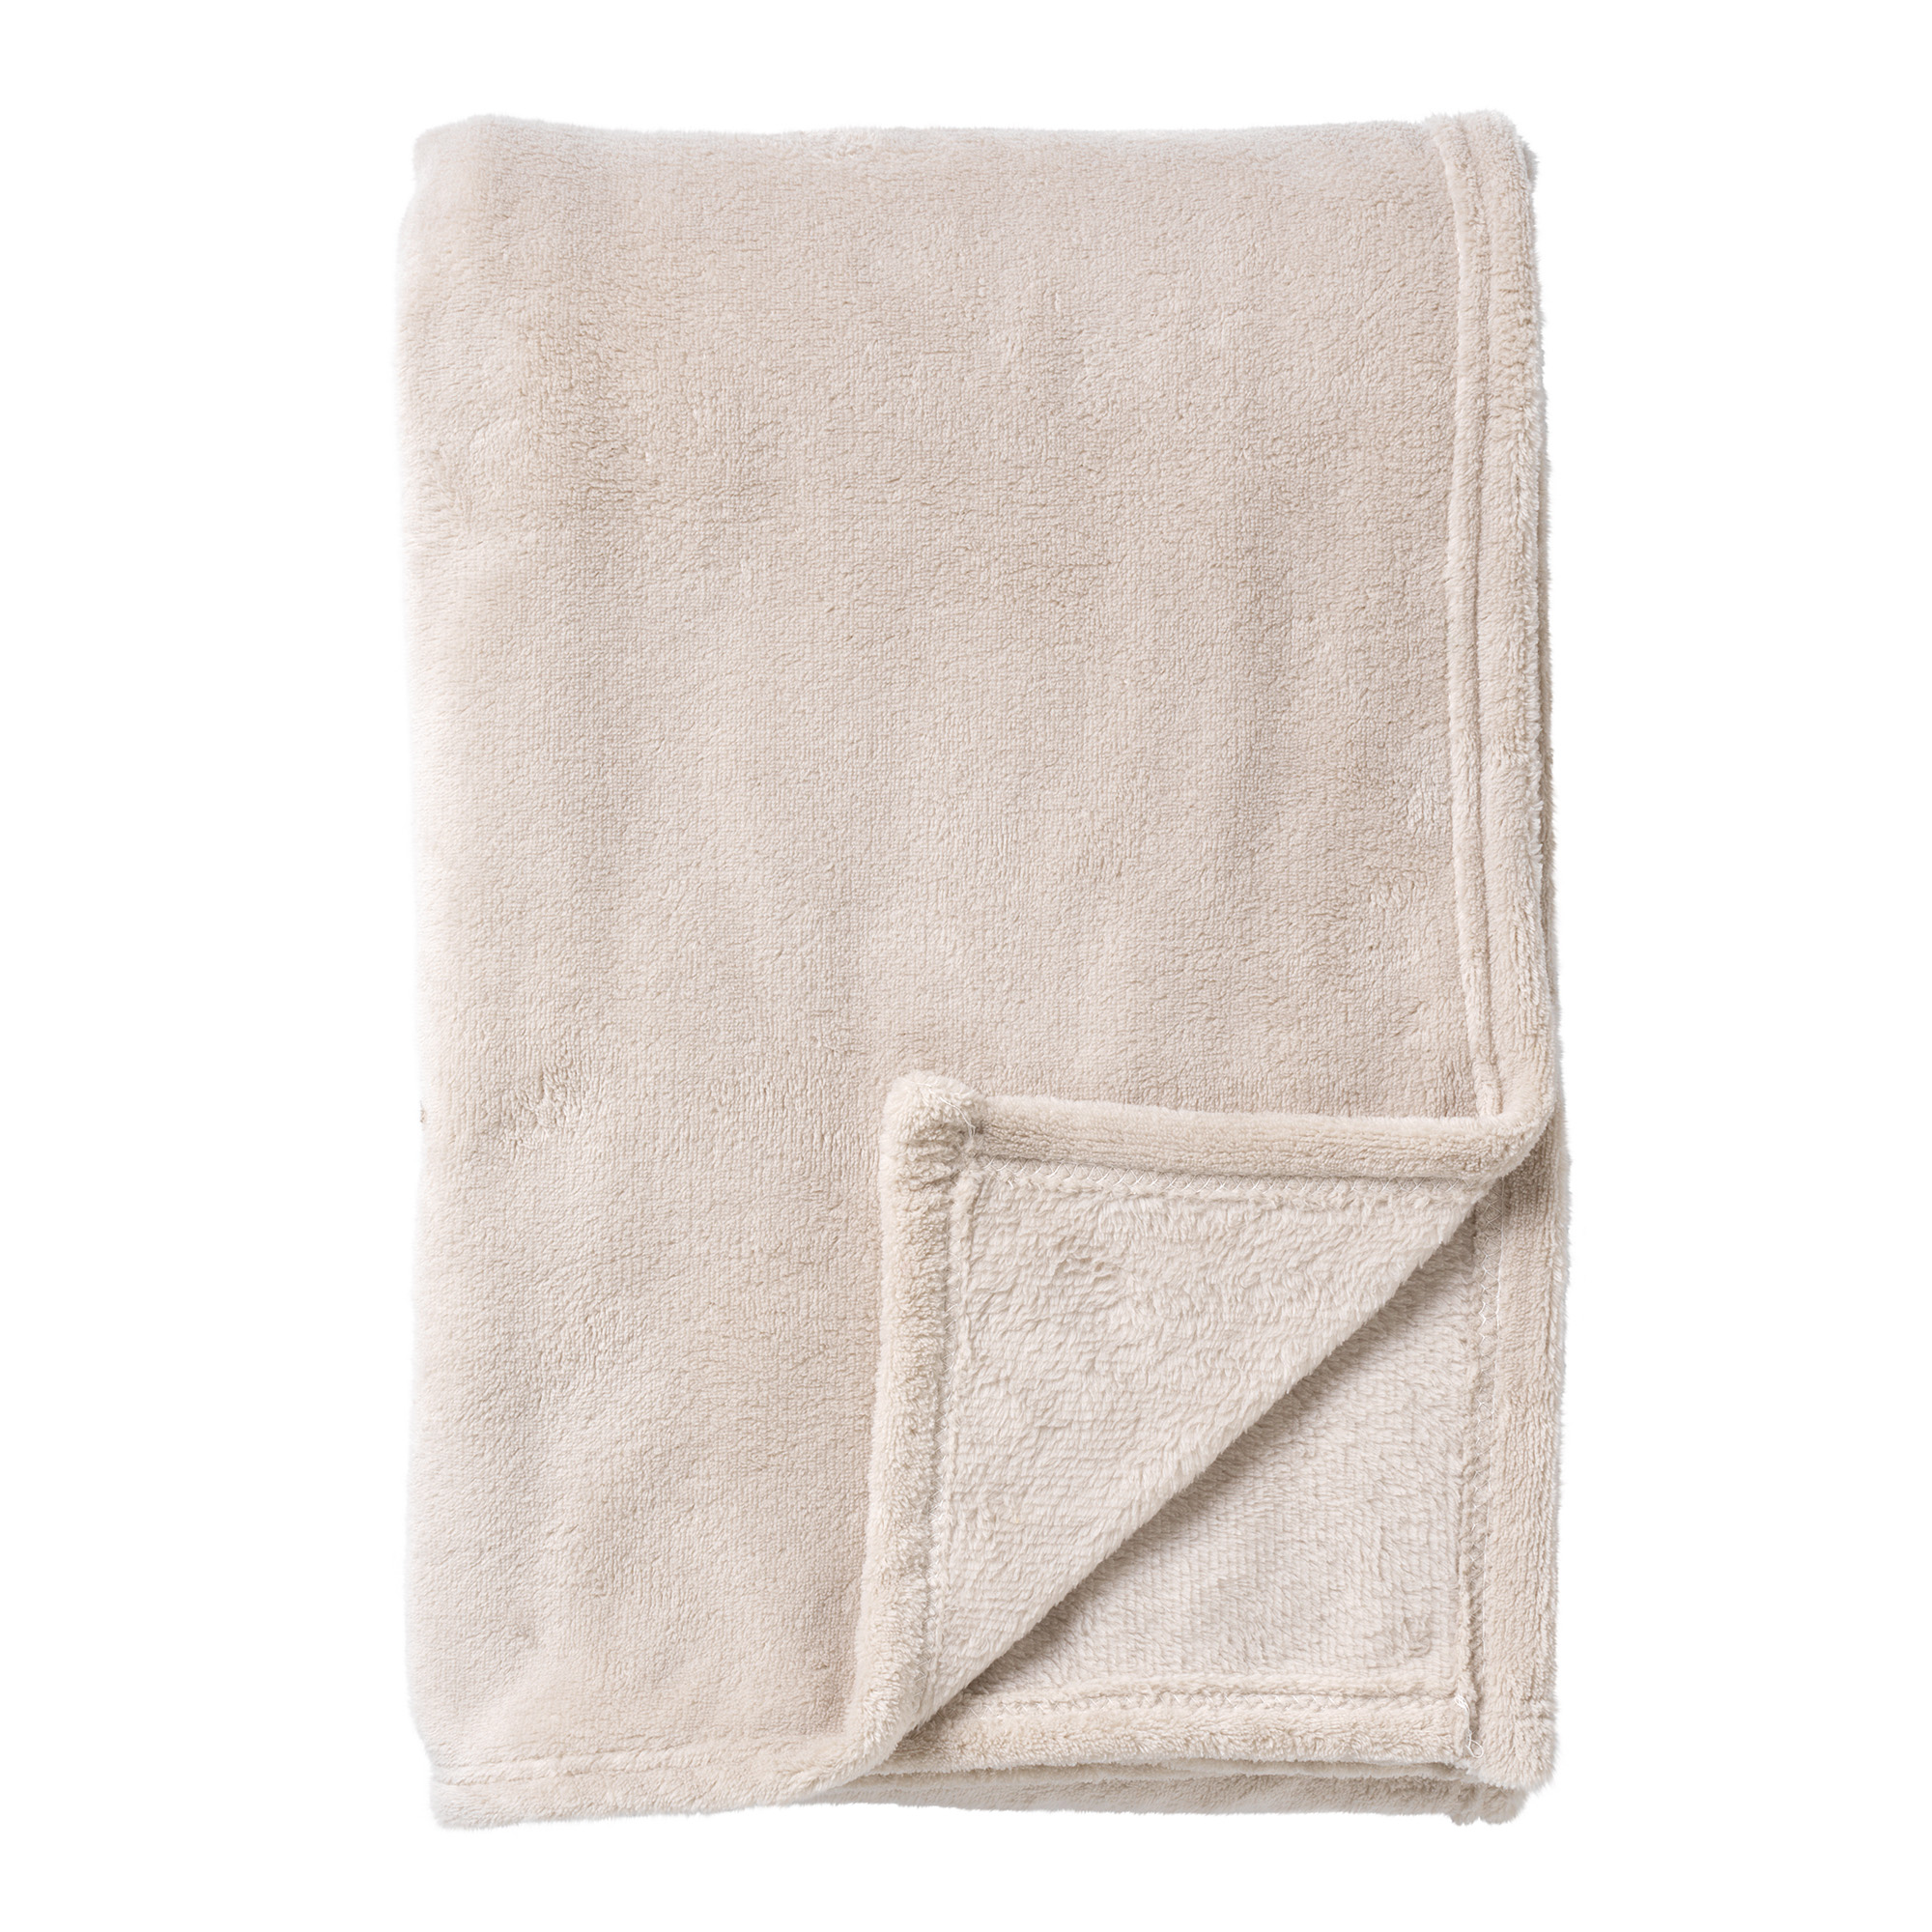 SIDNEY - Plaid Fleece deken van 100% gerecycled polyester – superzacht - 140x180 cm - Pumice Stone - beige